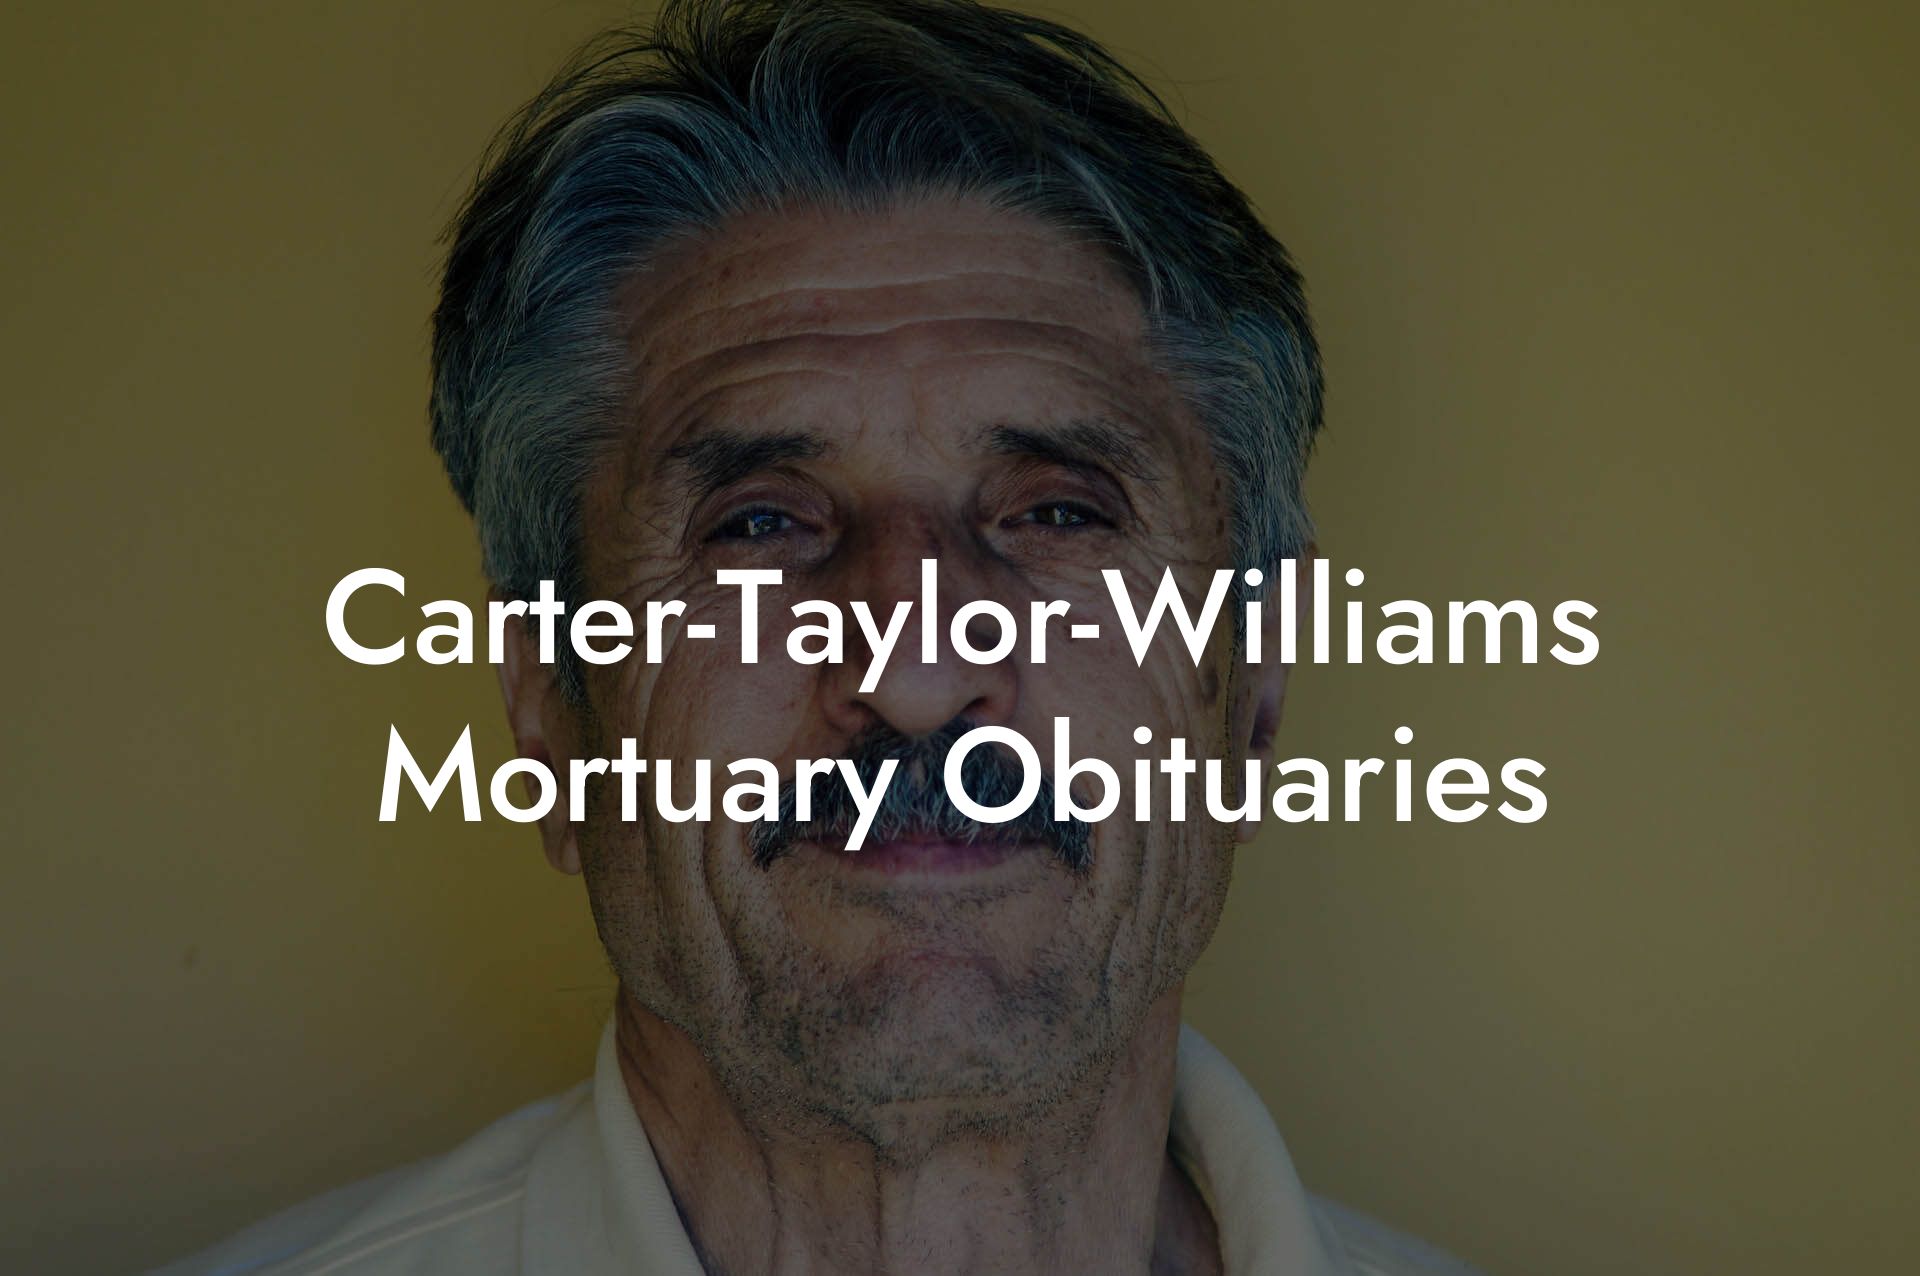 Carter-Taylor-Williams Mortuary Obituaries